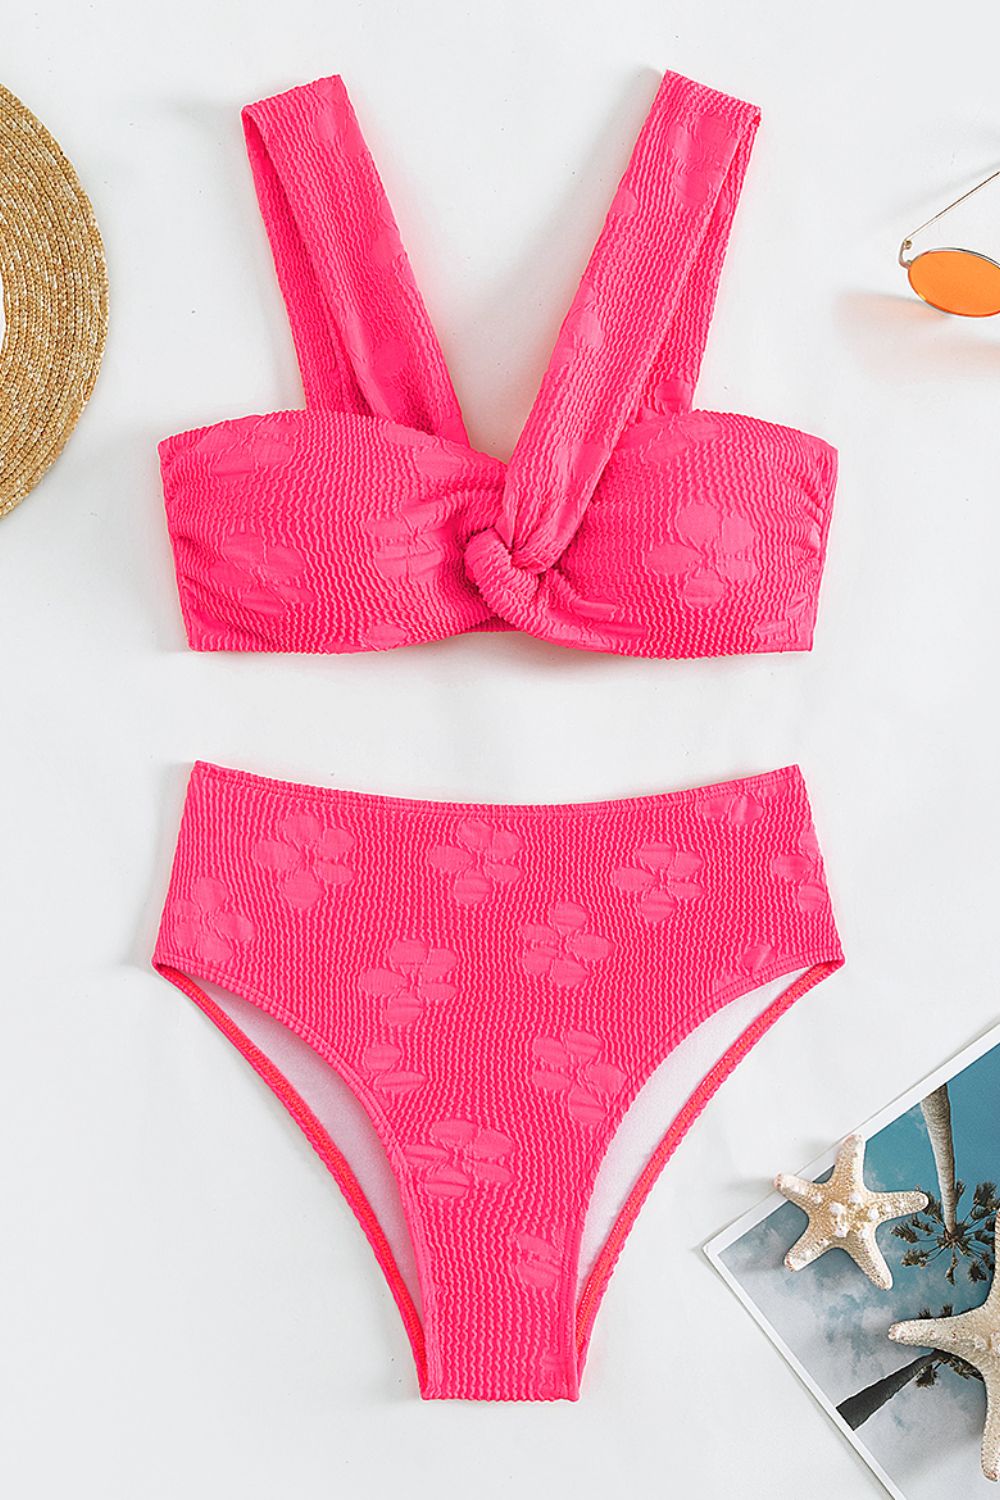 Sunset and Swim Textured Twisted Detail Bikini Set  Sunset and Swim Hot Pink S 